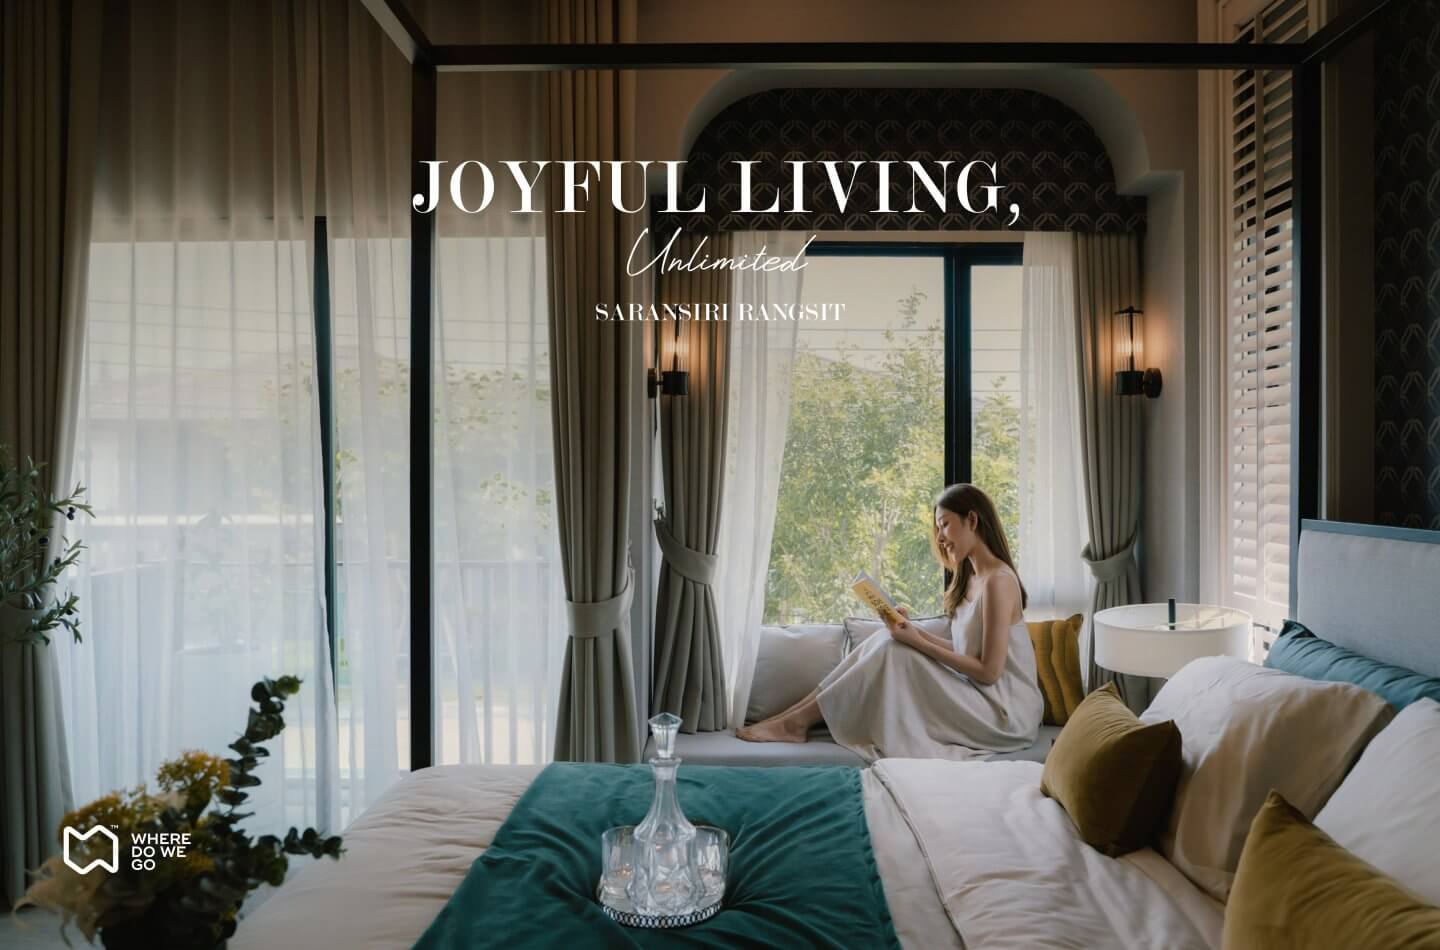 Joyful Living, Unlimited ‘SARANSIRI RANGSIT’